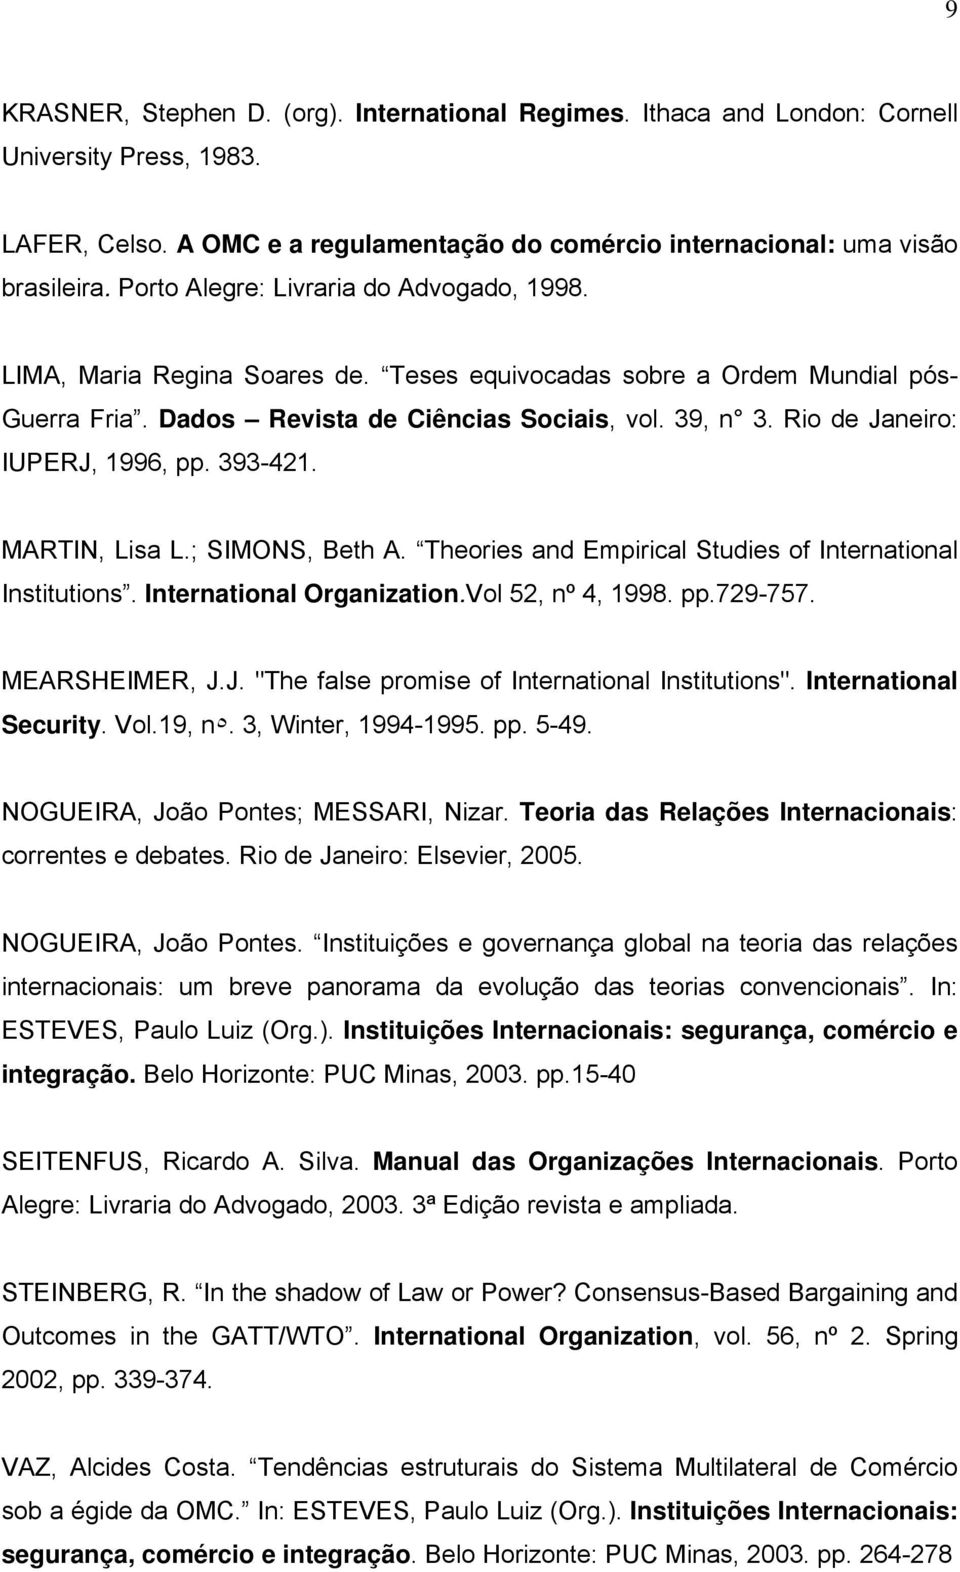 Rio de Janeiro: IUPERJ, 1996, pp. 393-421. MARTIN, Lisa L.; SIMONS, Beth A. Theories and Empirical Studies of International Institutions. International Organization.Vol 52, nº 4, 1998. pp.729-757.